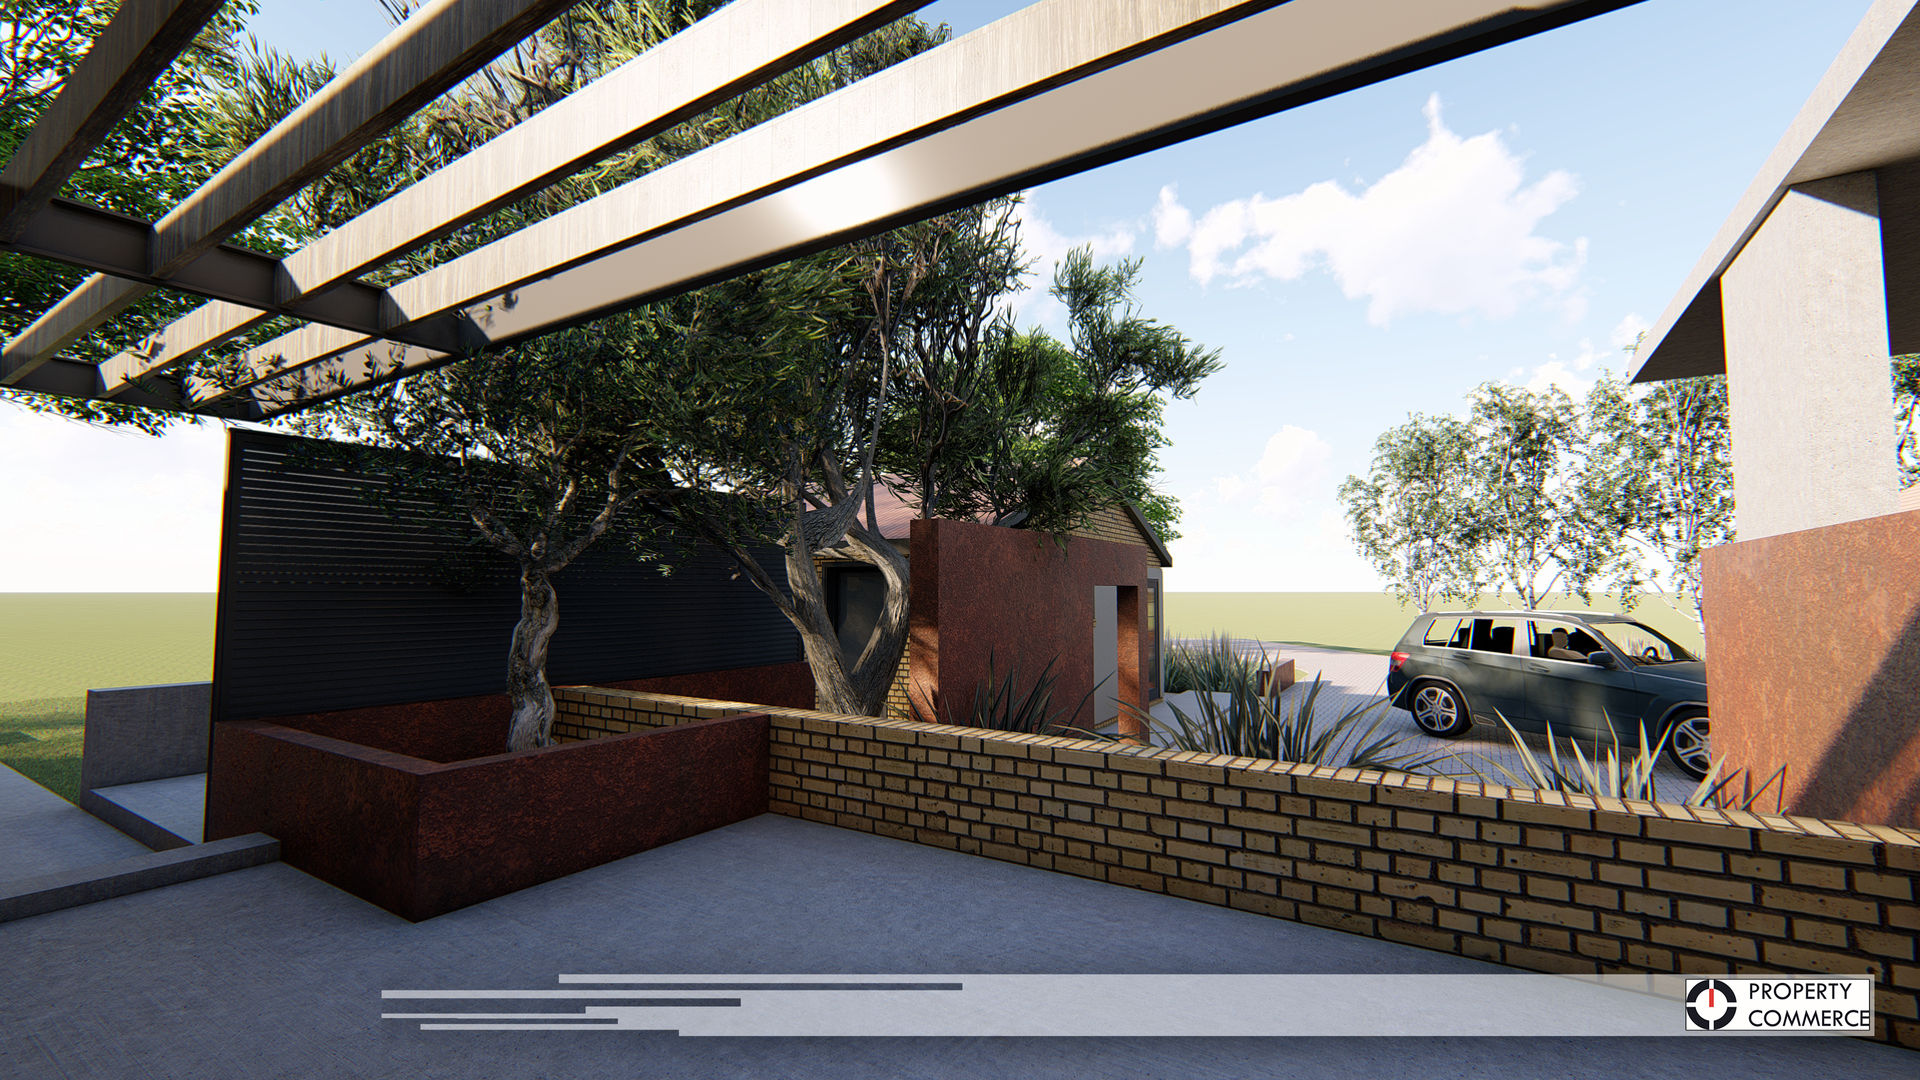 House Du Plessis, Property Commerce Architects Property Commerce Architects Balcones y terrazas de estilo moderno